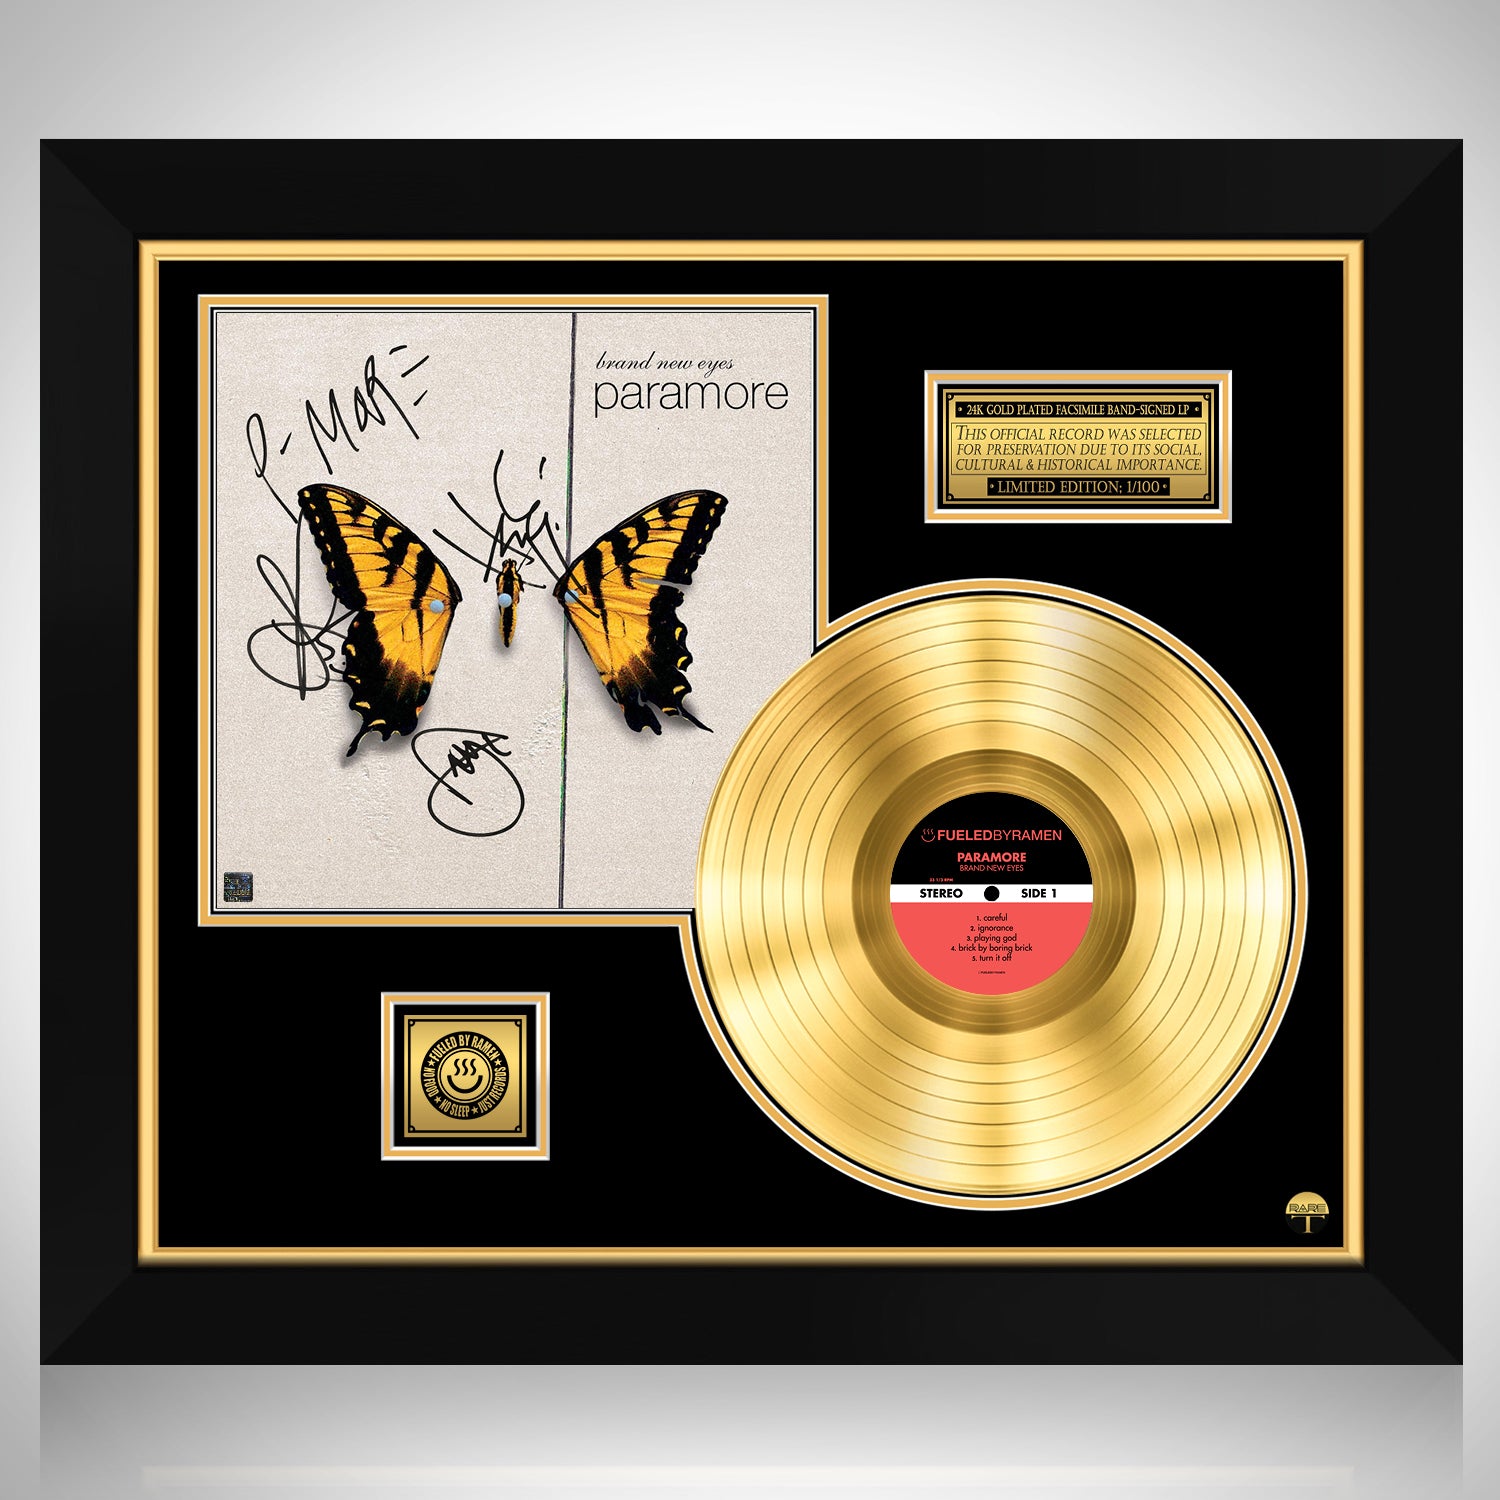 Paramore LP Vinyl Record - Brand New Eyes